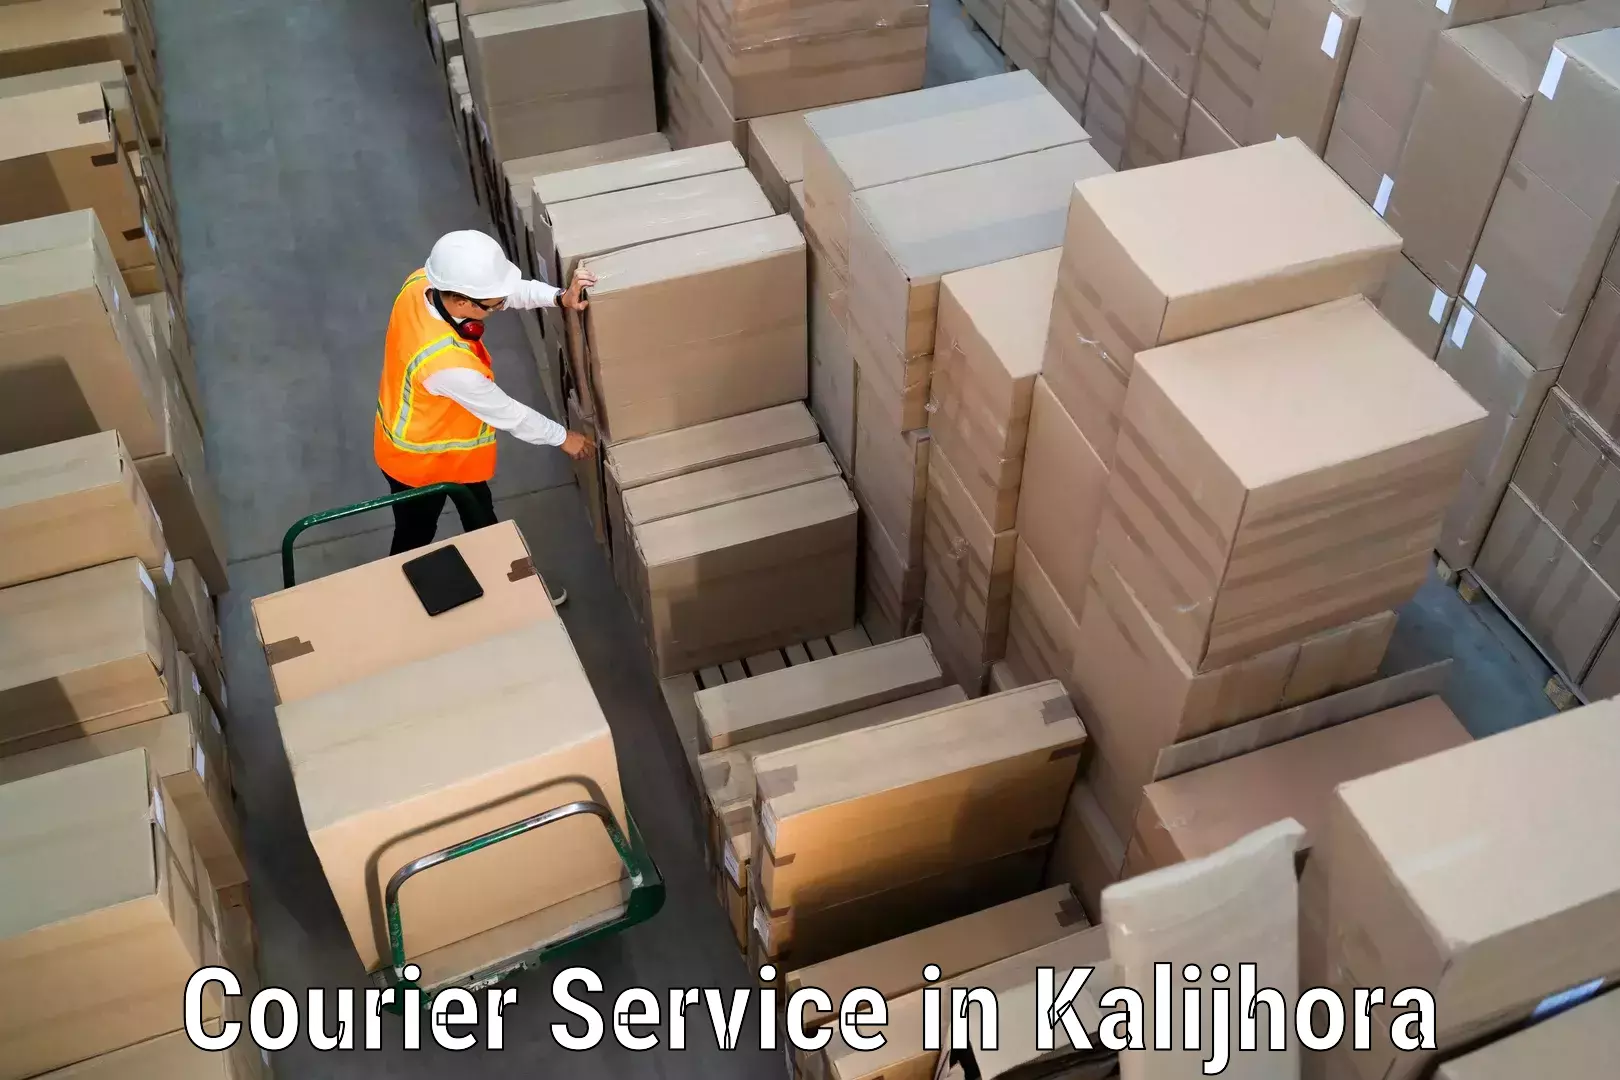 Enhanced tracking features in Kalijhora